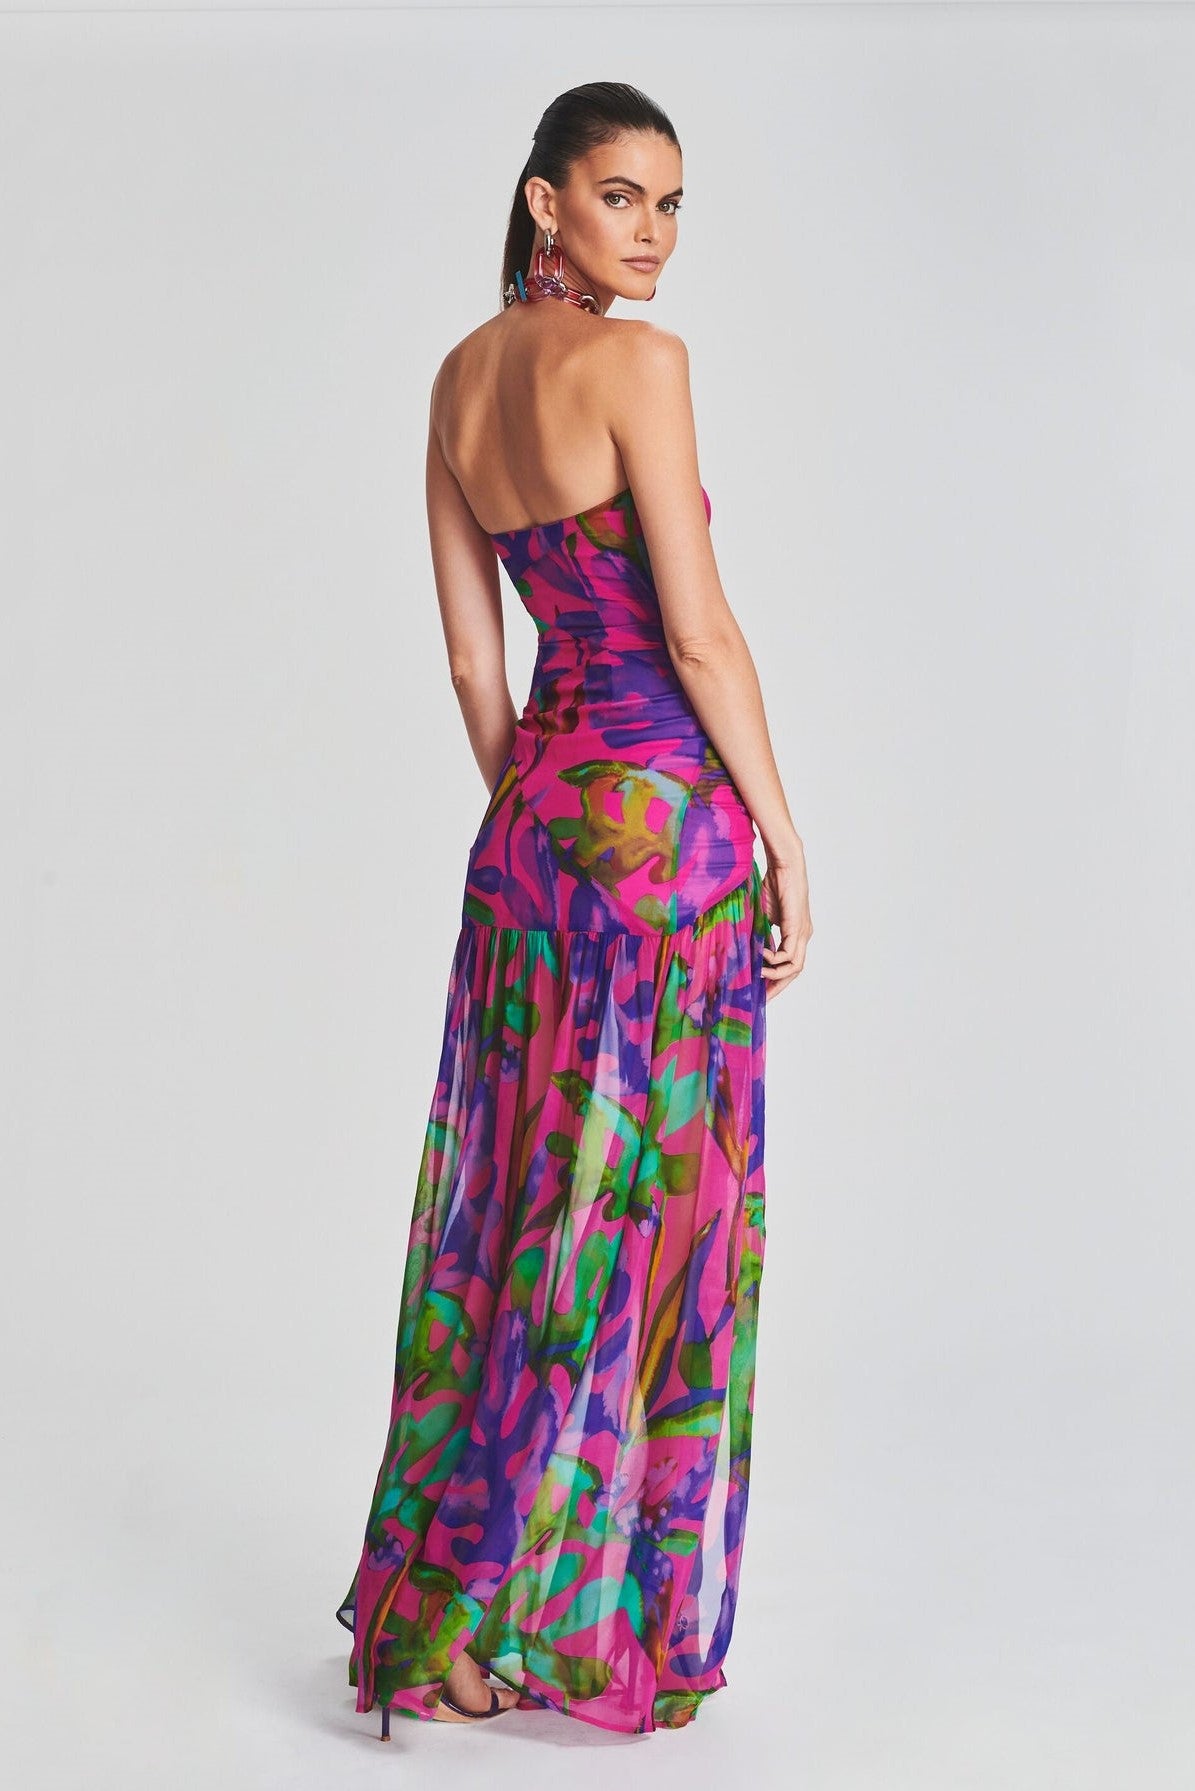 Floral Tube Top Slit Backless Maxi Dress 